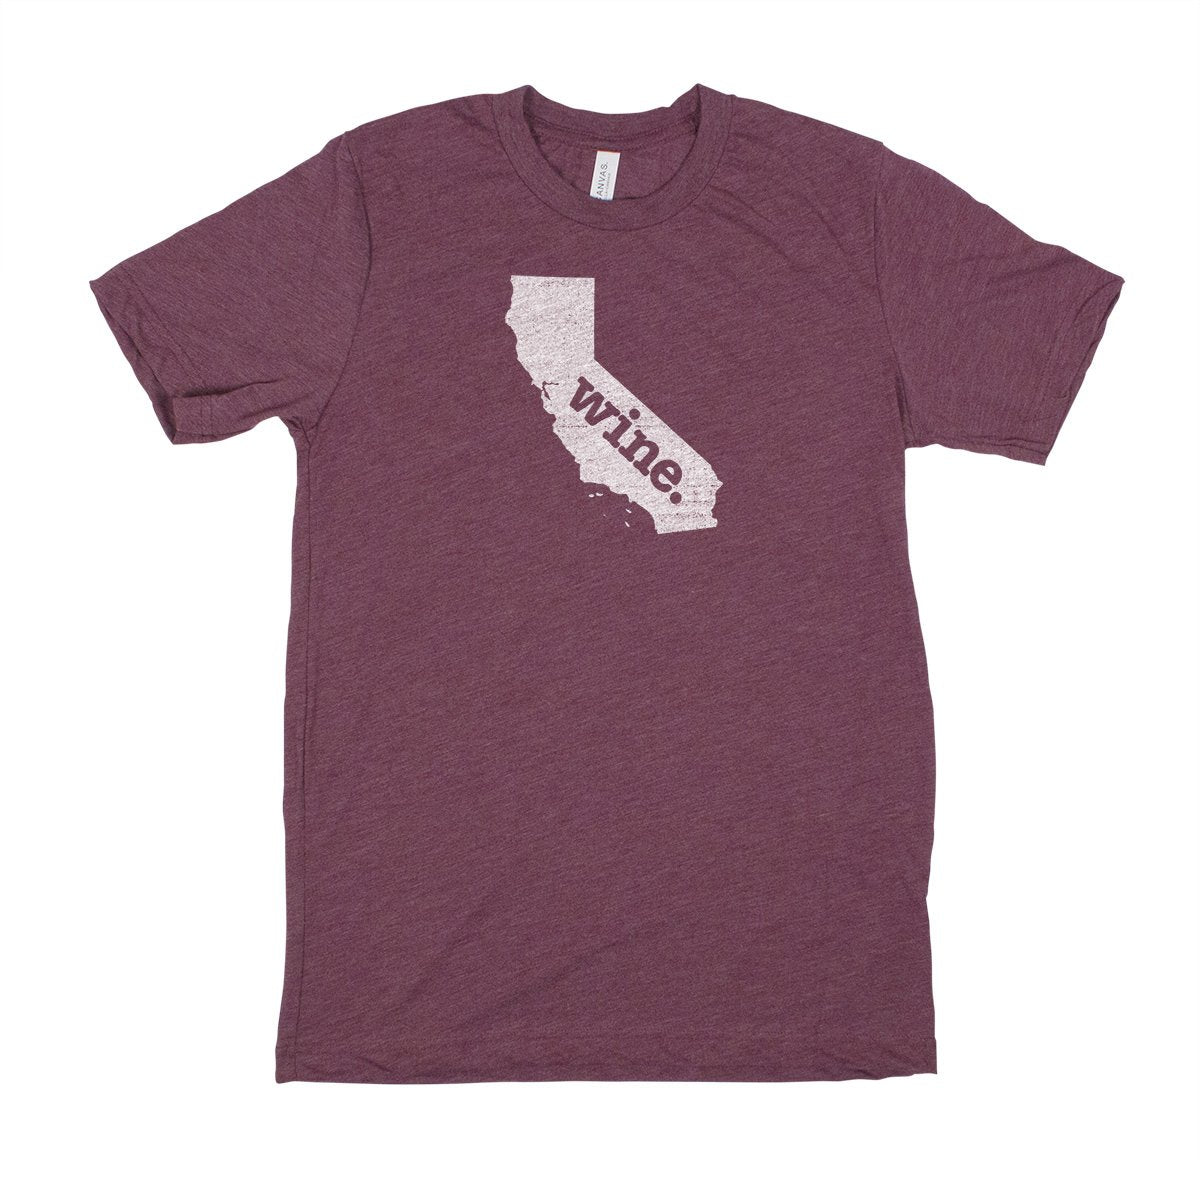 camp. Men's Unisex T-Shirt - Idaho